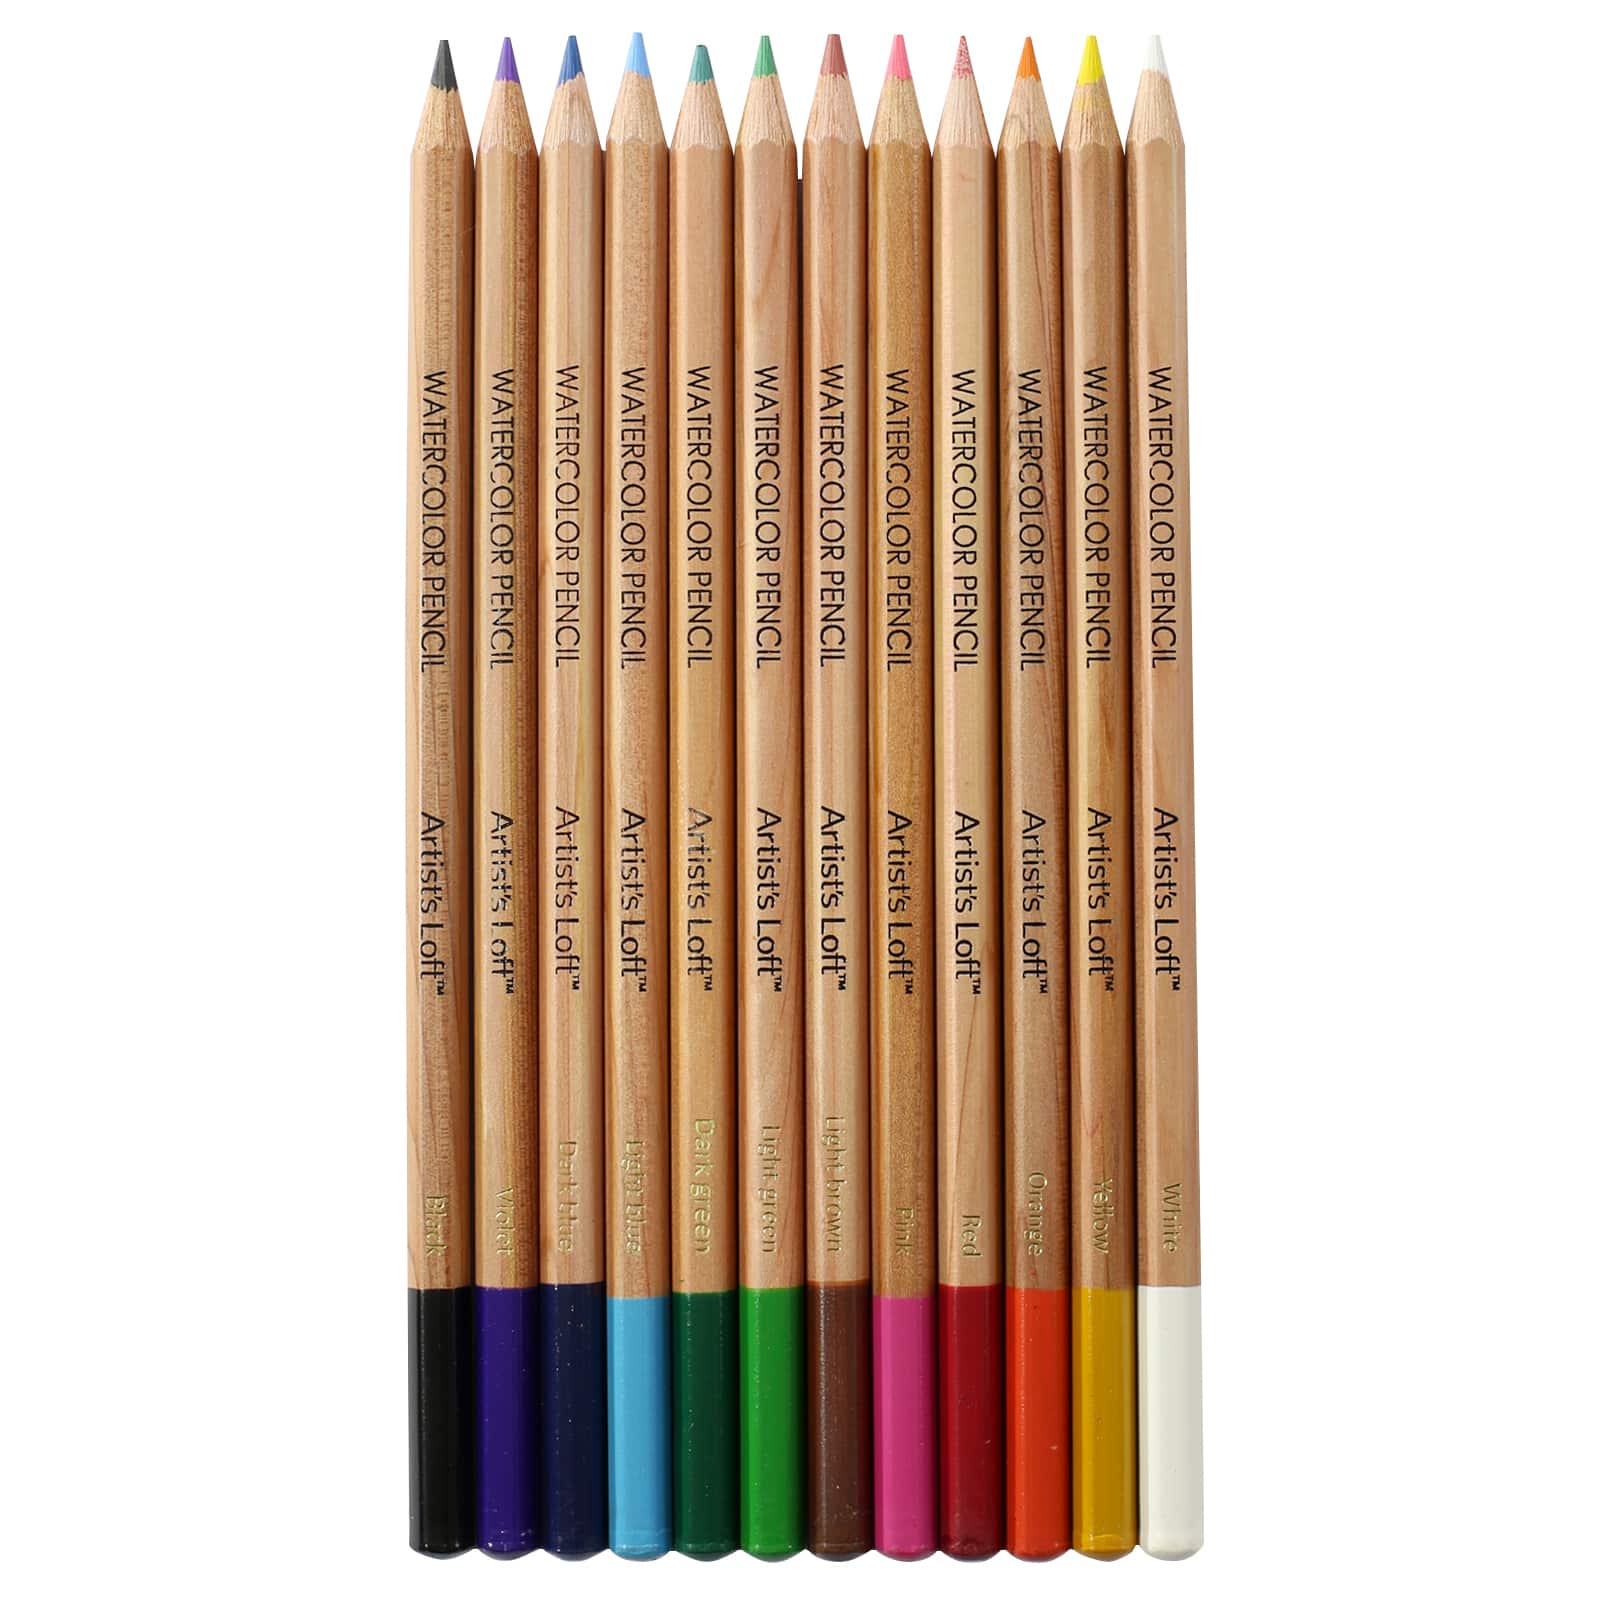 12 Packs: 12 ct. (144 total) Watercolor Pencil Set by Artist's Loft™